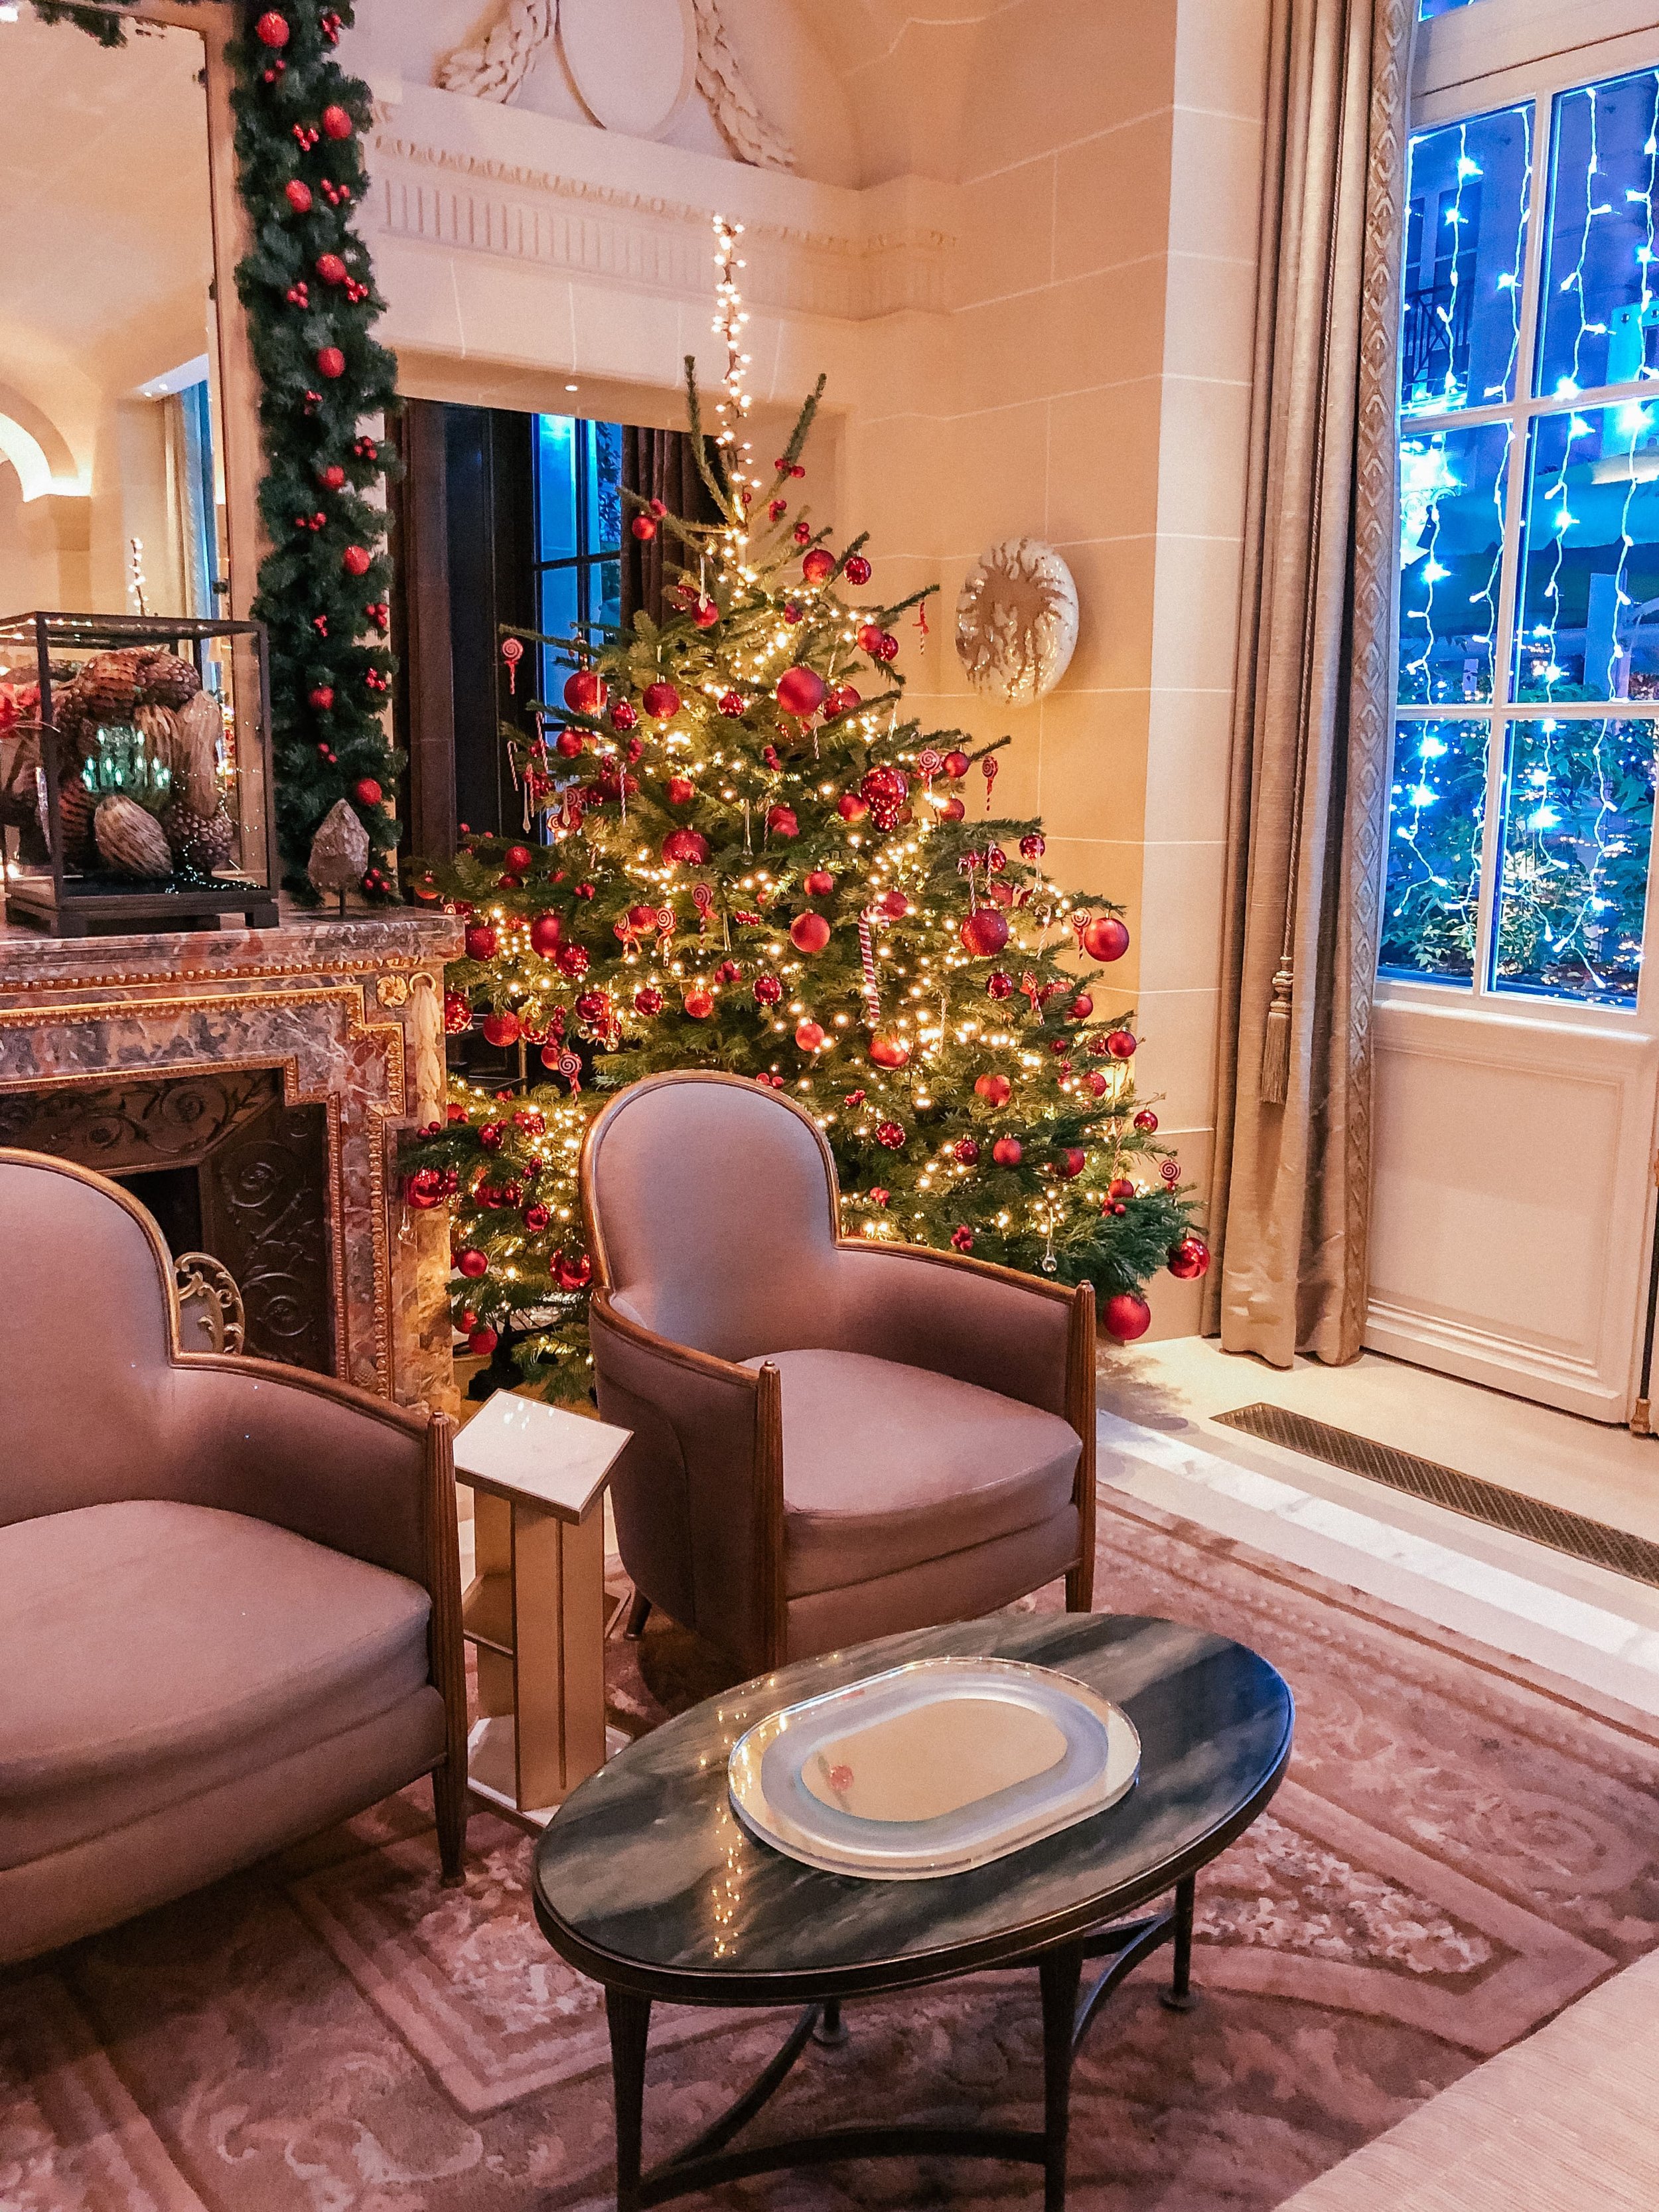 Hotel De Crillon Christmas Tree - Paris - France